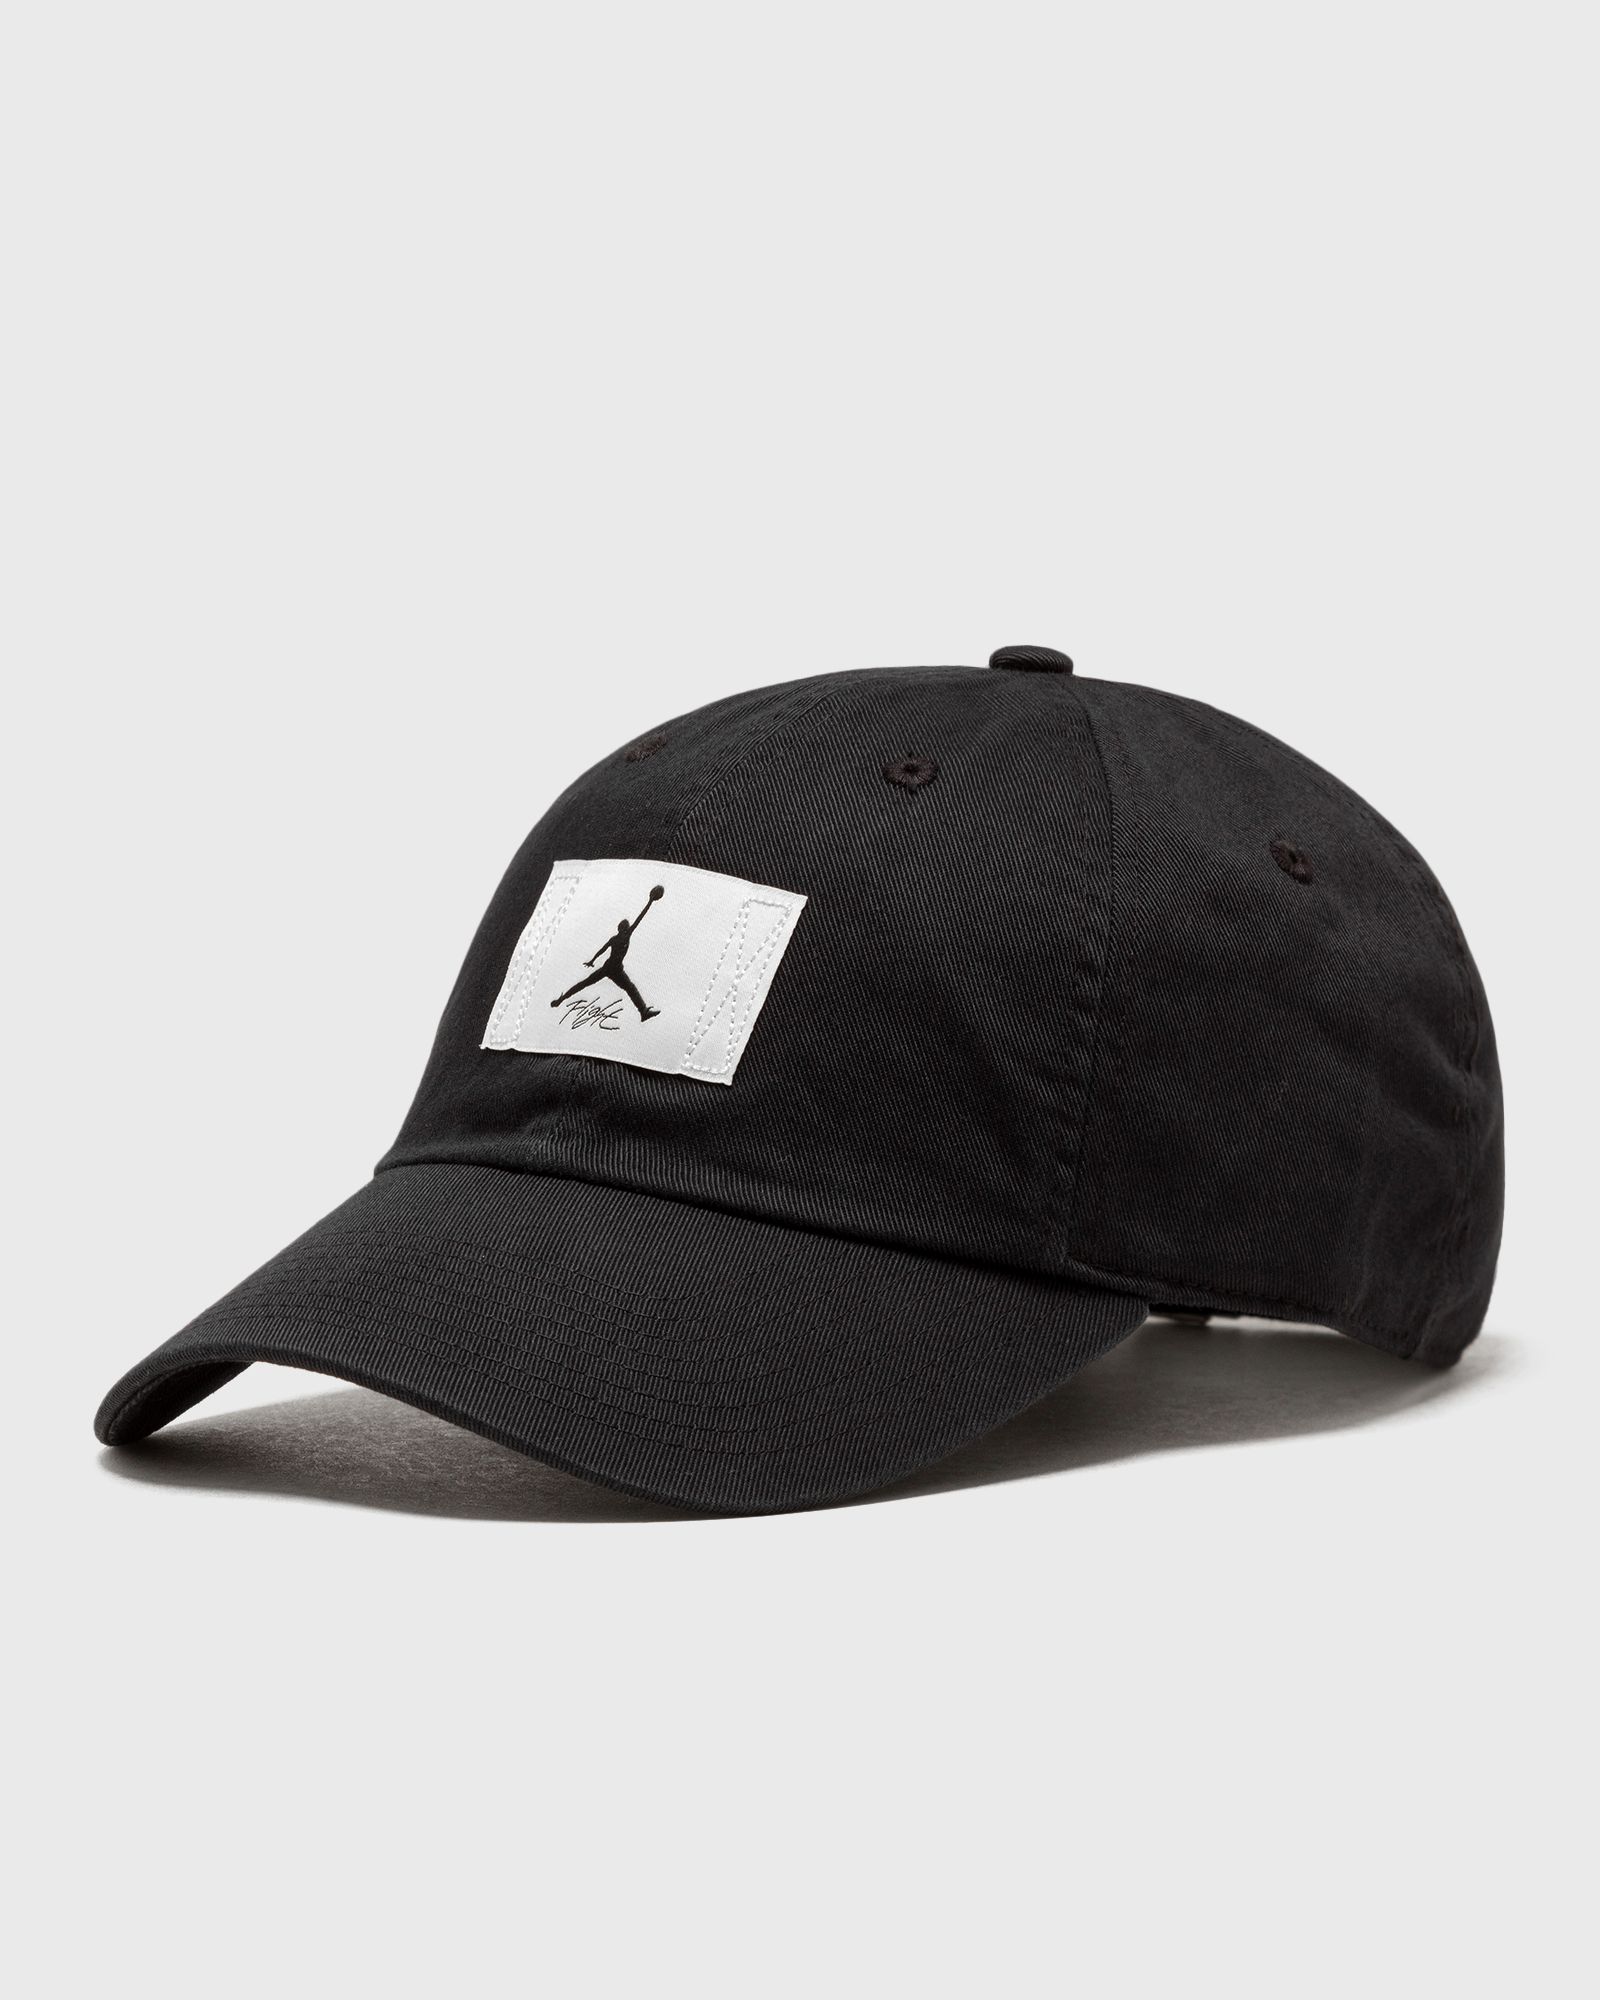 Jordan Club Cap Adjustable Hat men Caps black in Größe:M/L von Jordan